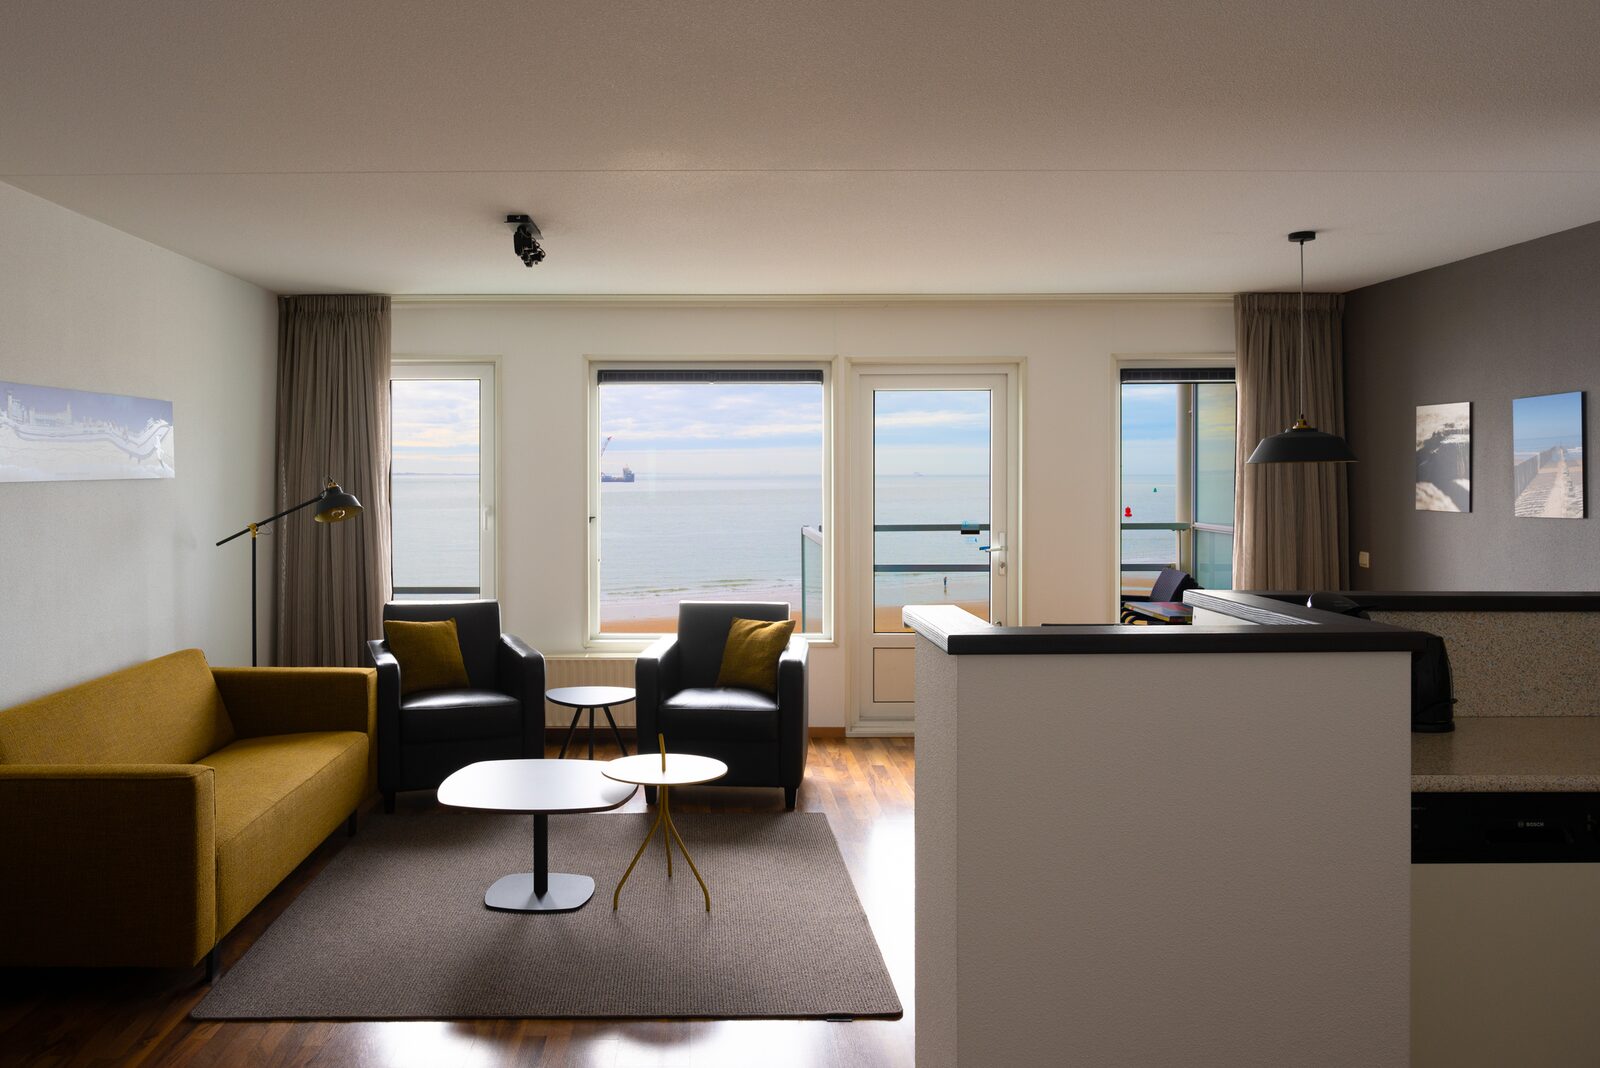 3-room between apartment with ocean view